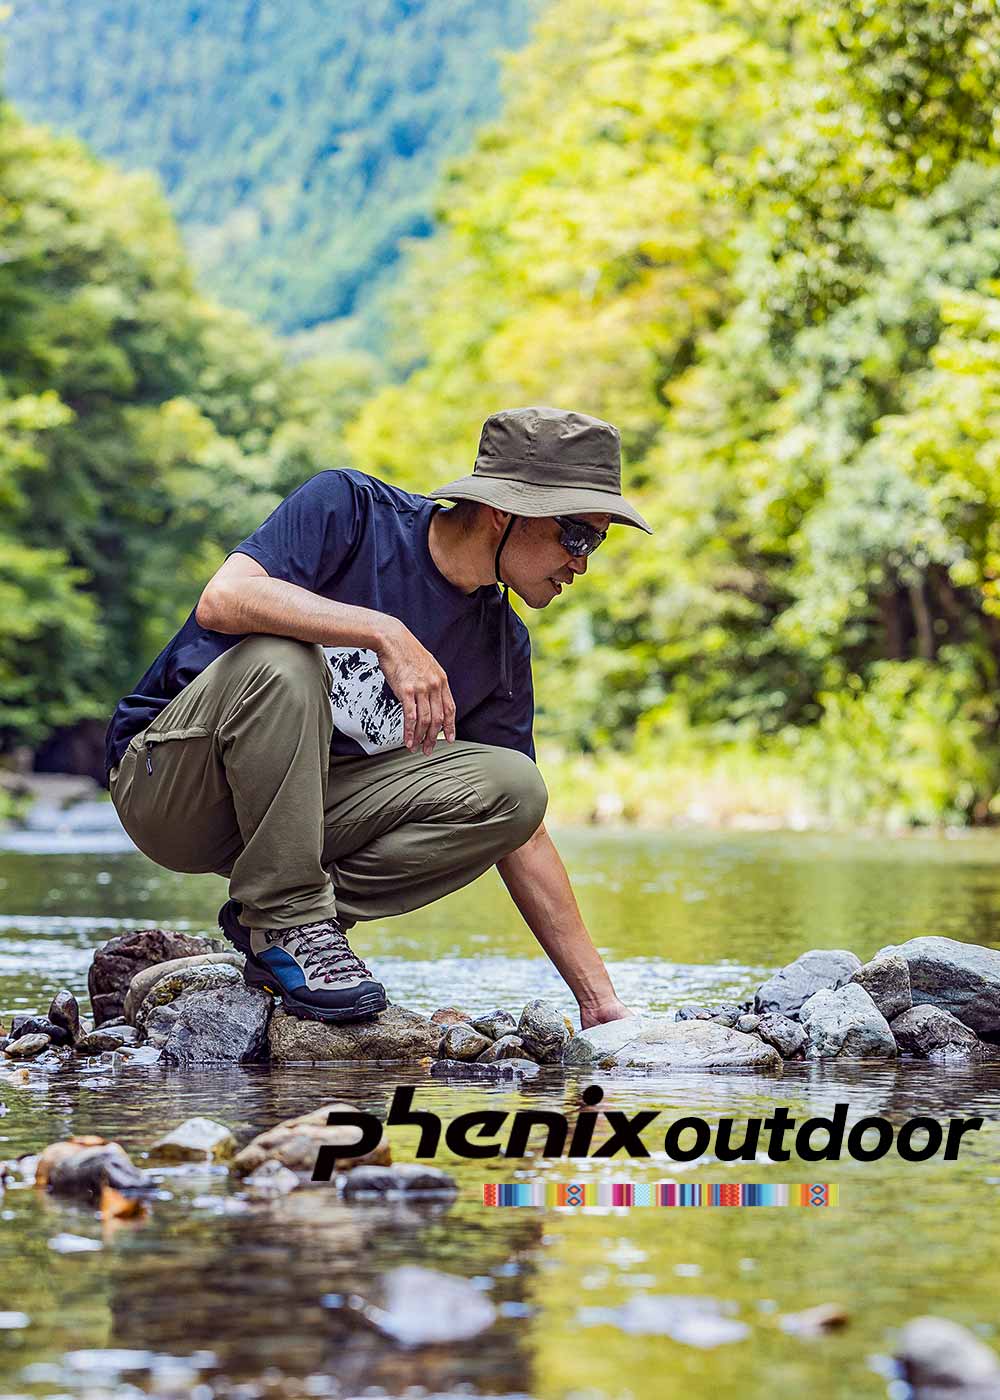 phenix（フェニックス）公式通販 | phenix Online Store